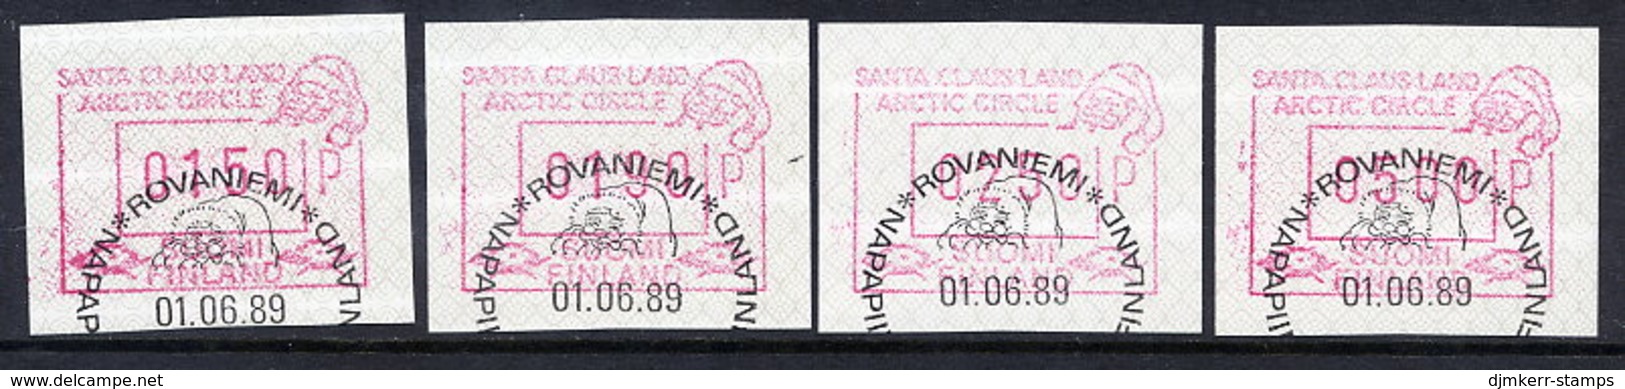 FINLAND 1989 Santa Claus Land , 4 Different Values Used .Michel 6 - Machine Labels [ATM]